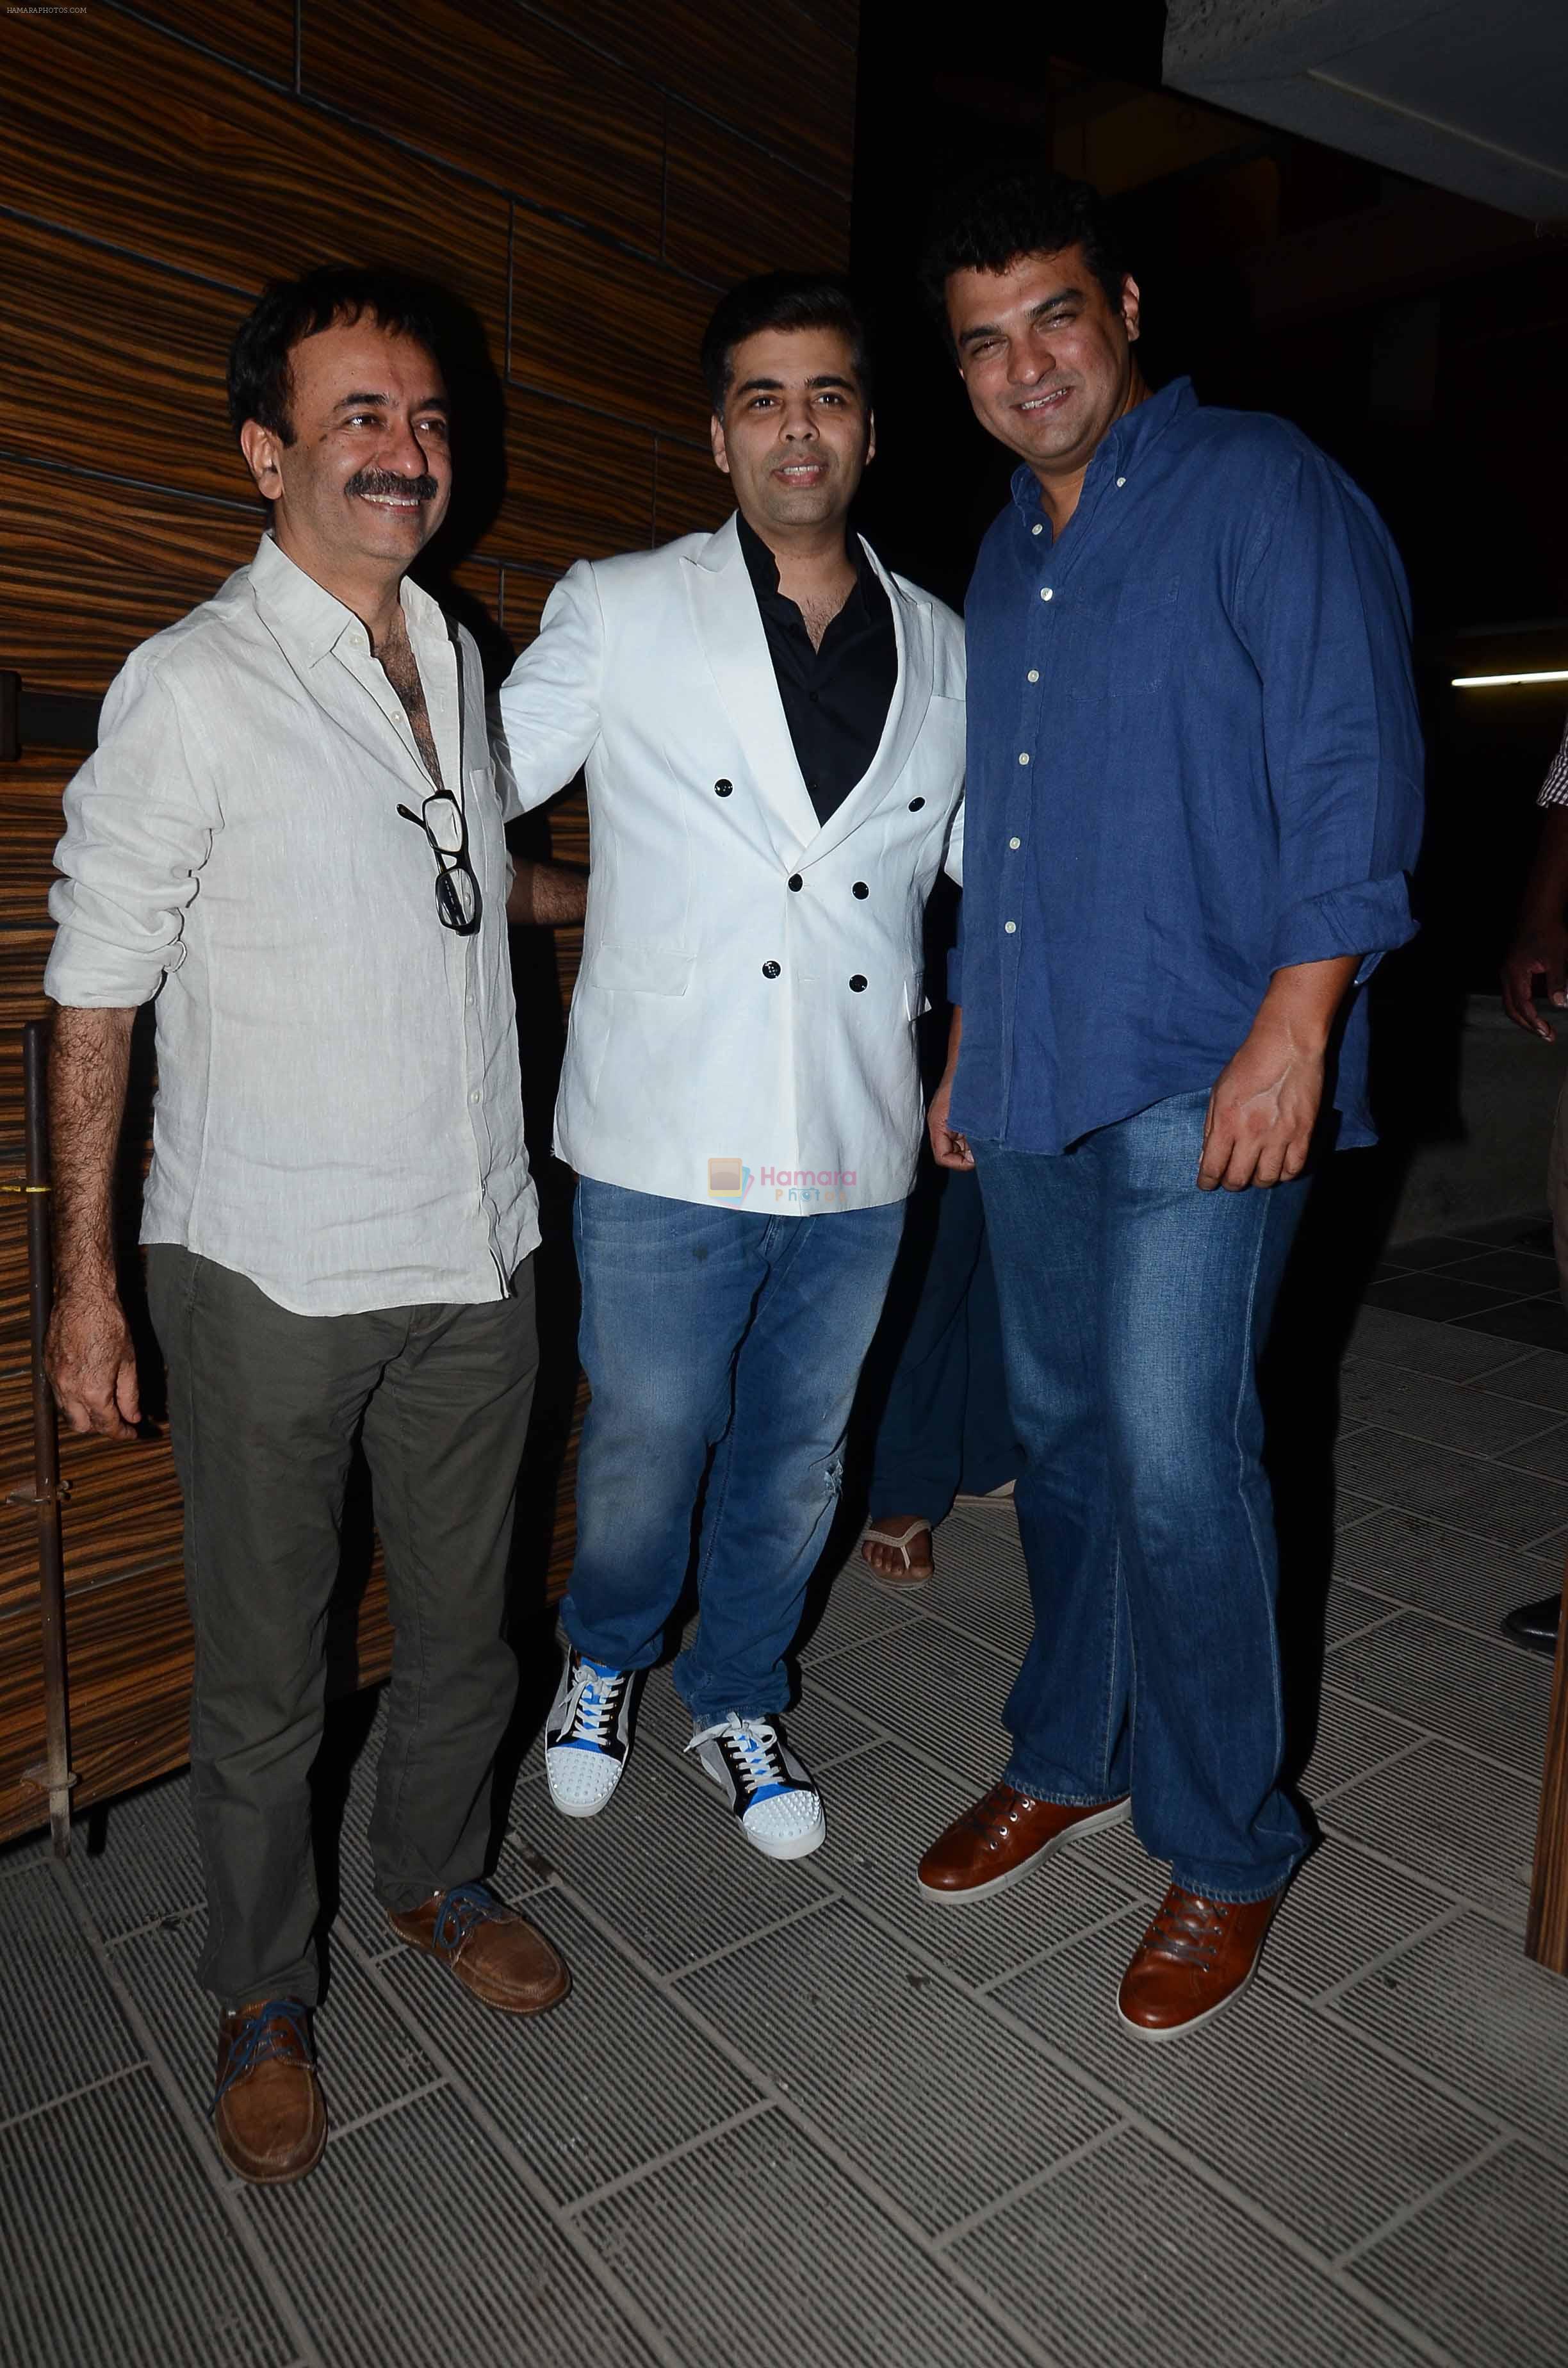 Rajkumar Hirani, Karan Johar, Siddharth Roy Kapur at aamir khan party in Mumbai on 7th May 2015